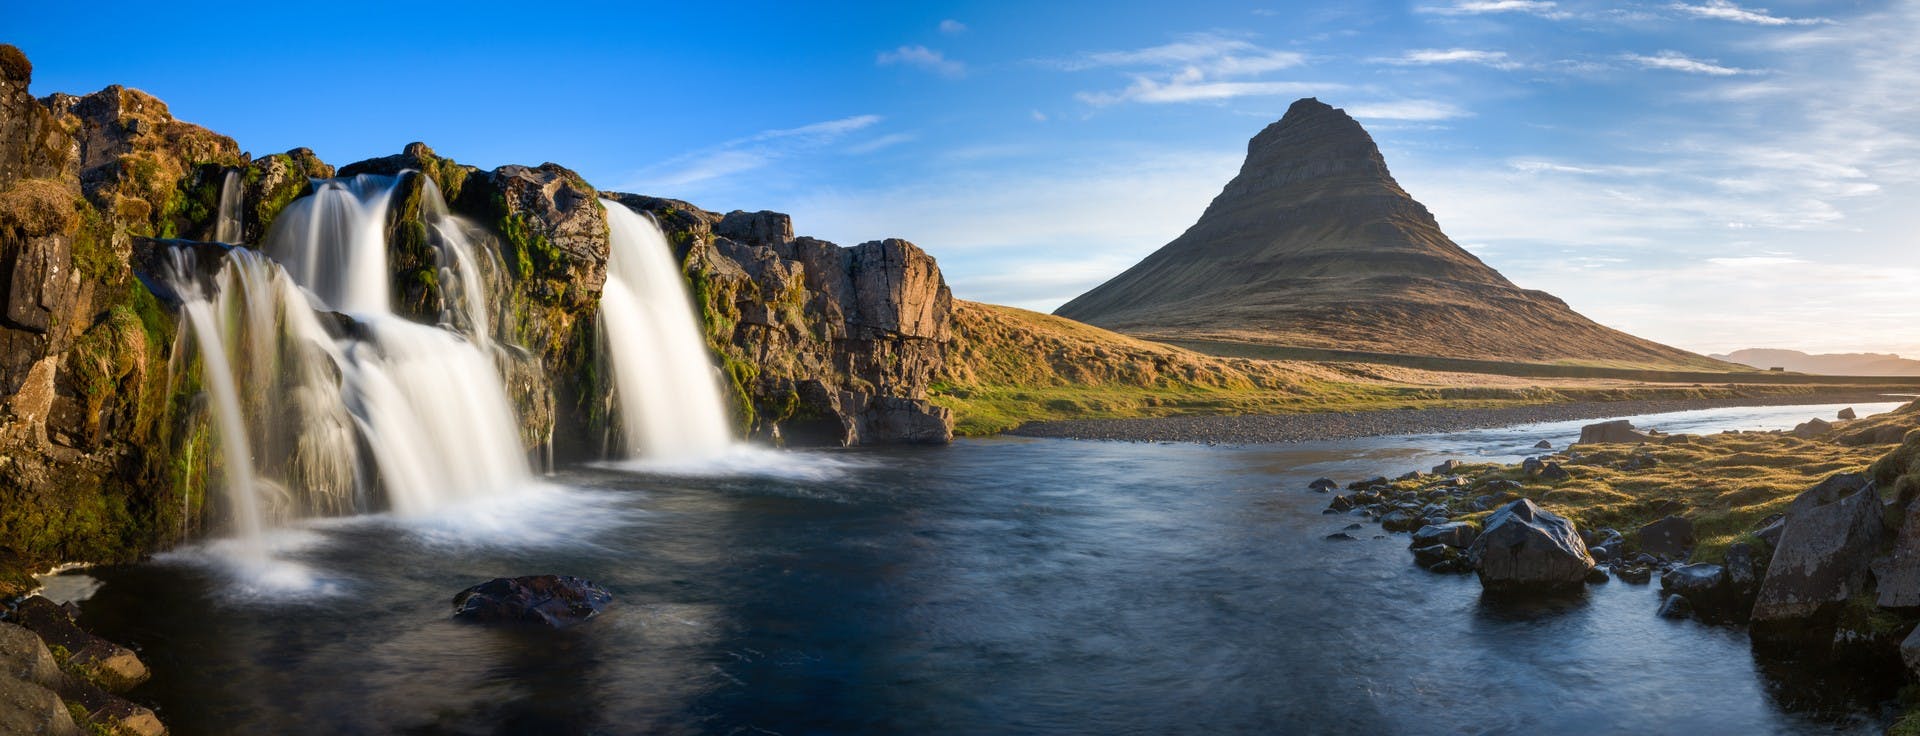 Kirkjufellsfoss waterfall and mountain, Iceland